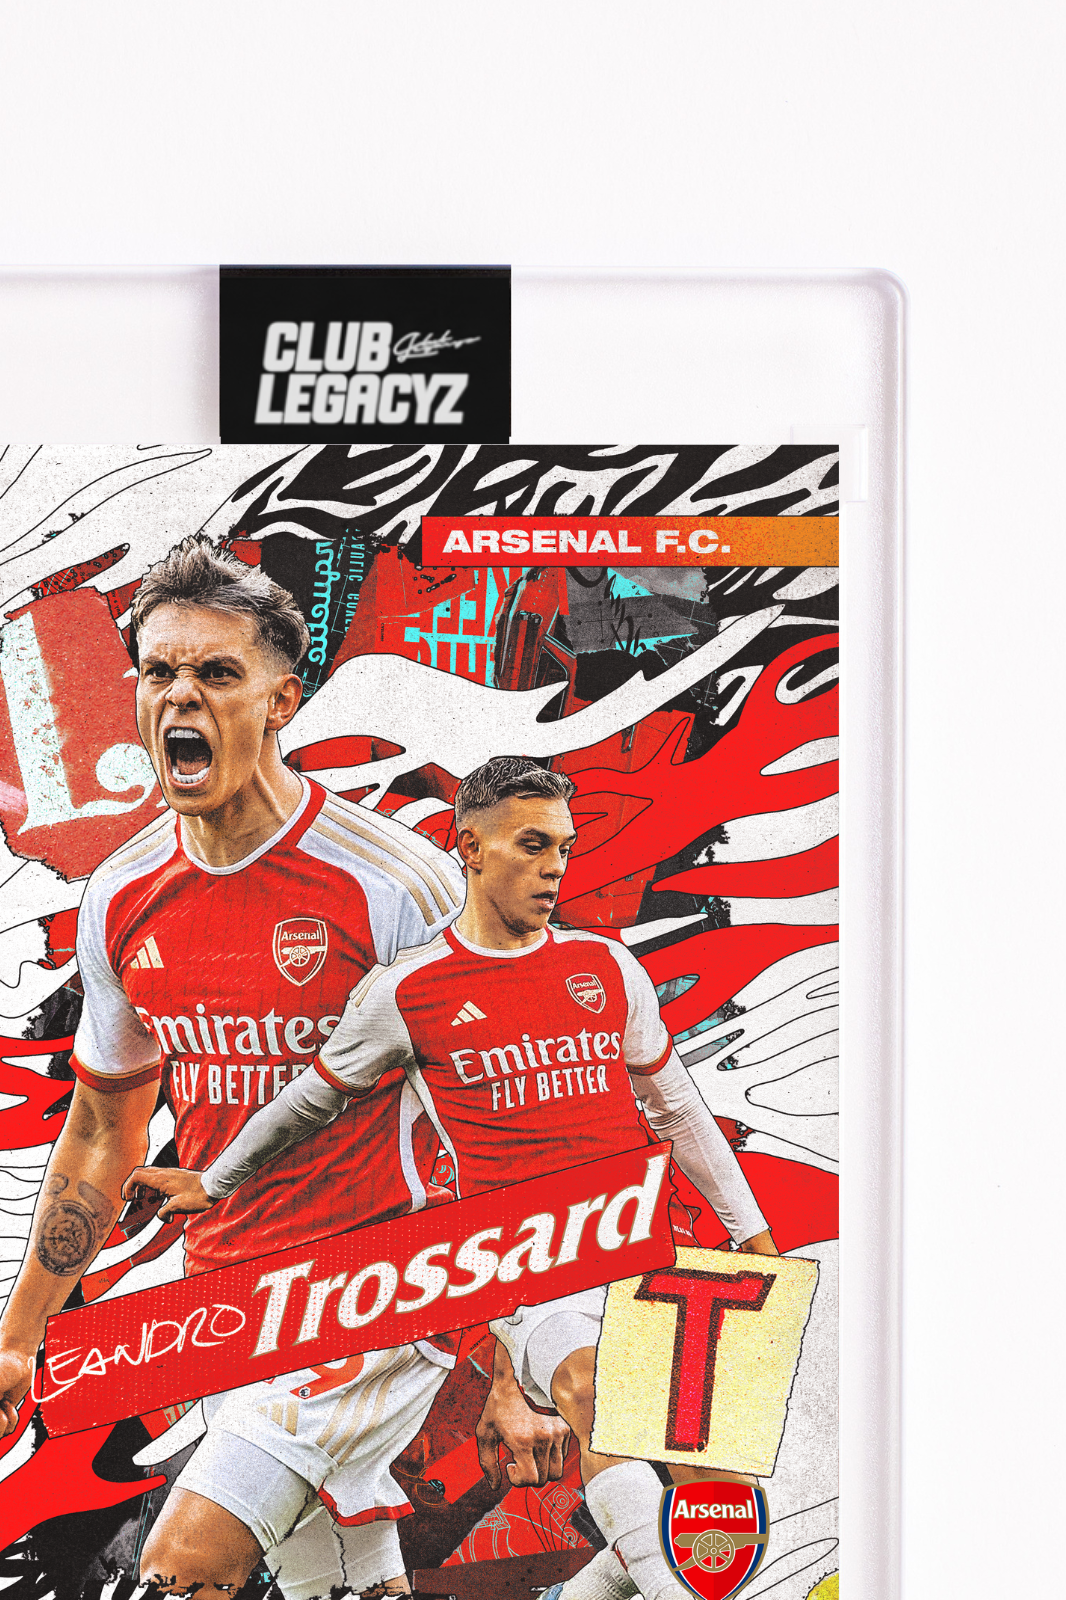 Arsenal FC - Icon Leandro Trossard 50 exemplaires